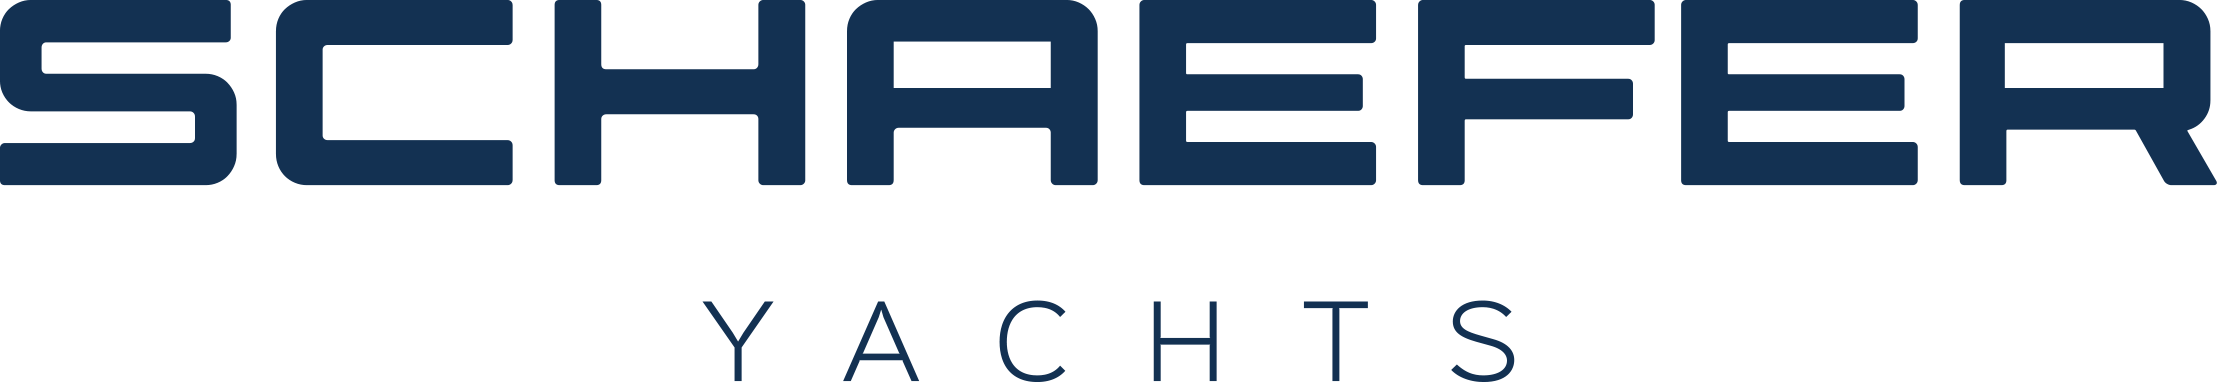 Schaefer logo